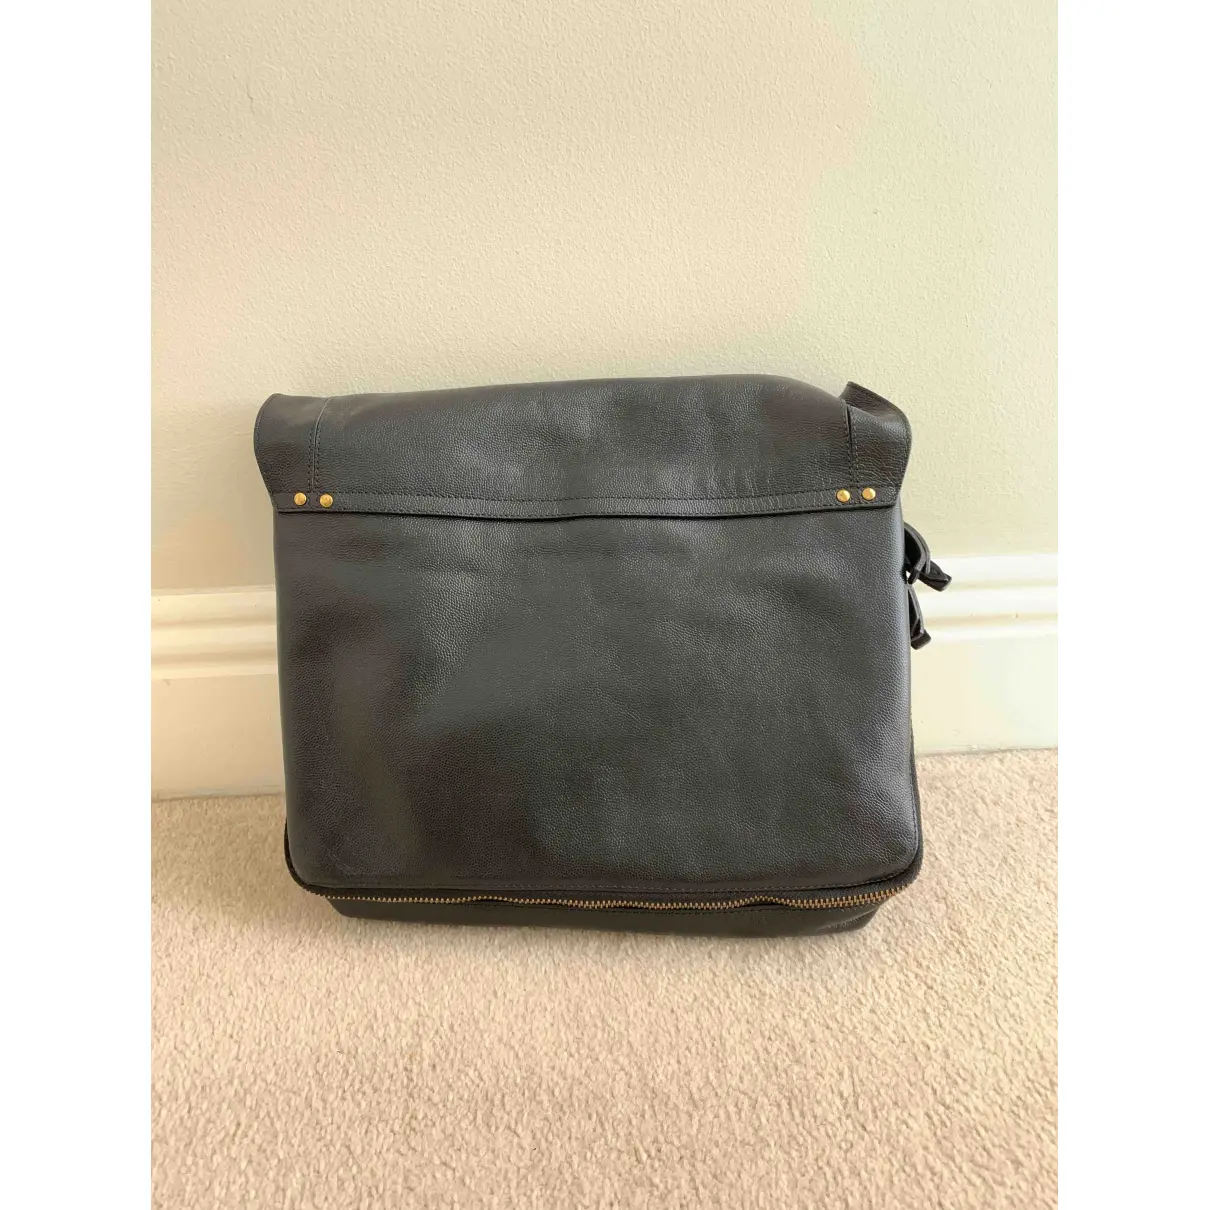 Buy Jerome Dreyfuss Albert leather crossbody bag online